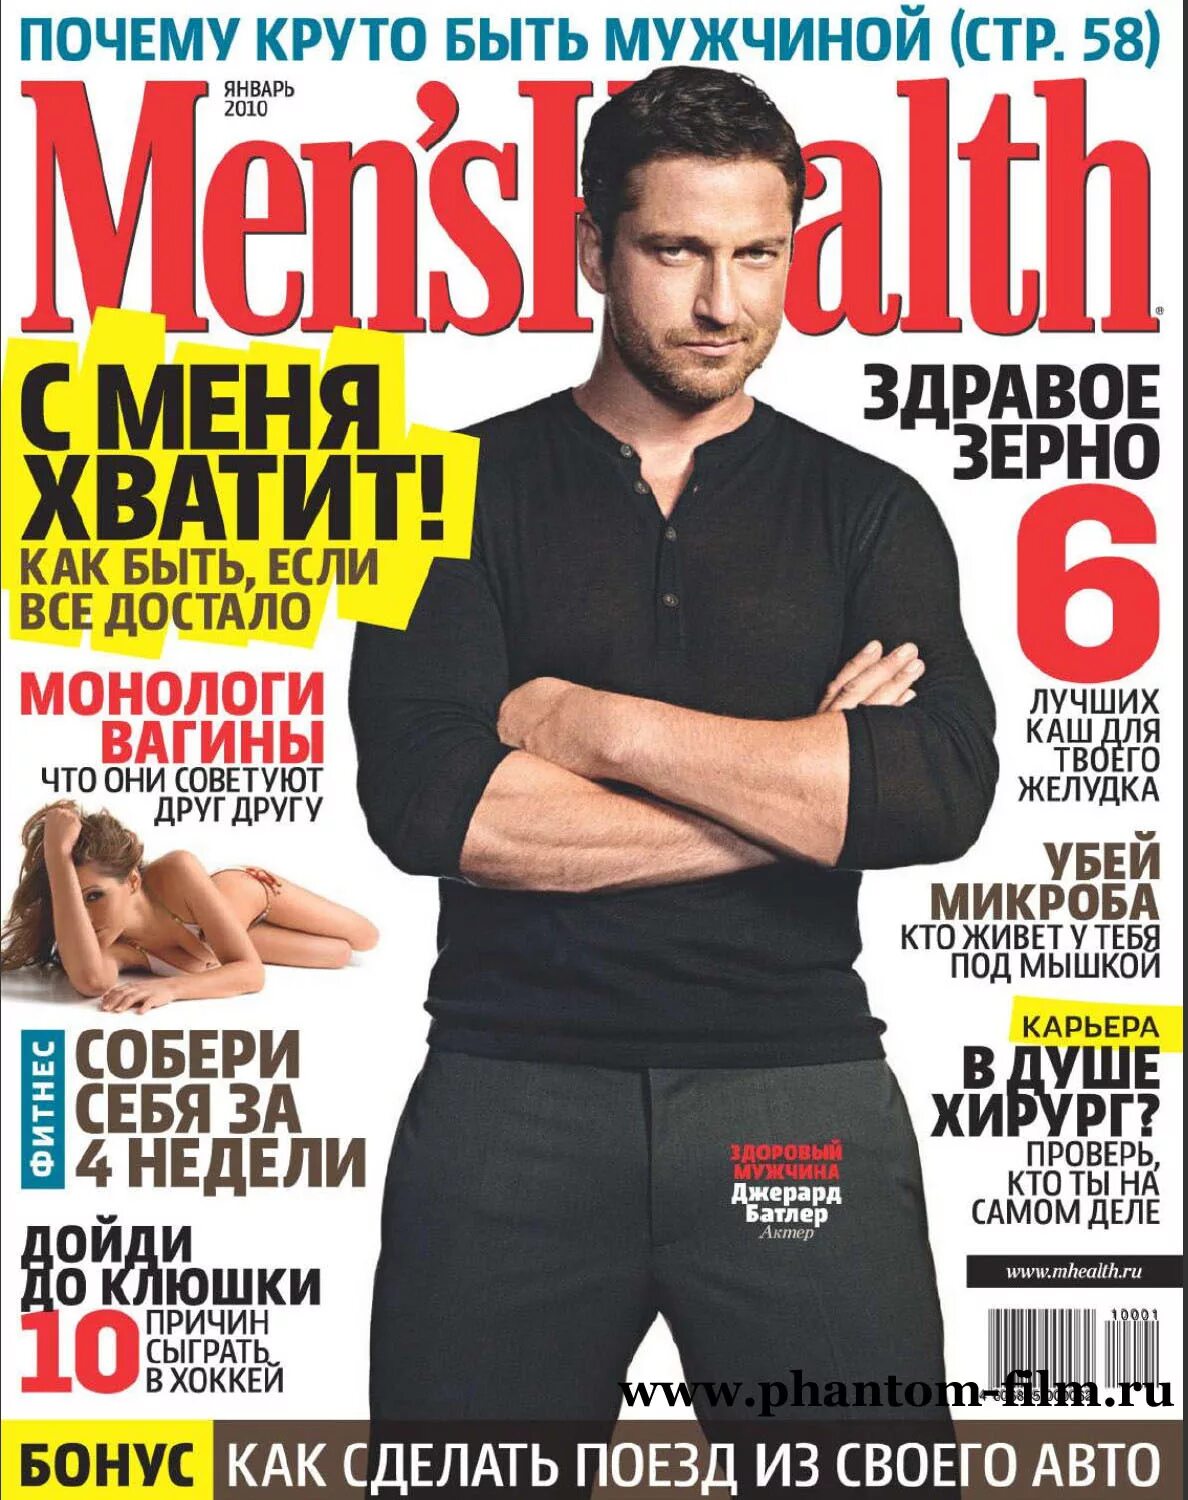 Men s books. Обложка Менс Хелс. Обложка мужского журнала. Журнал men's Health. Менс Хелс журнал для мужчин.